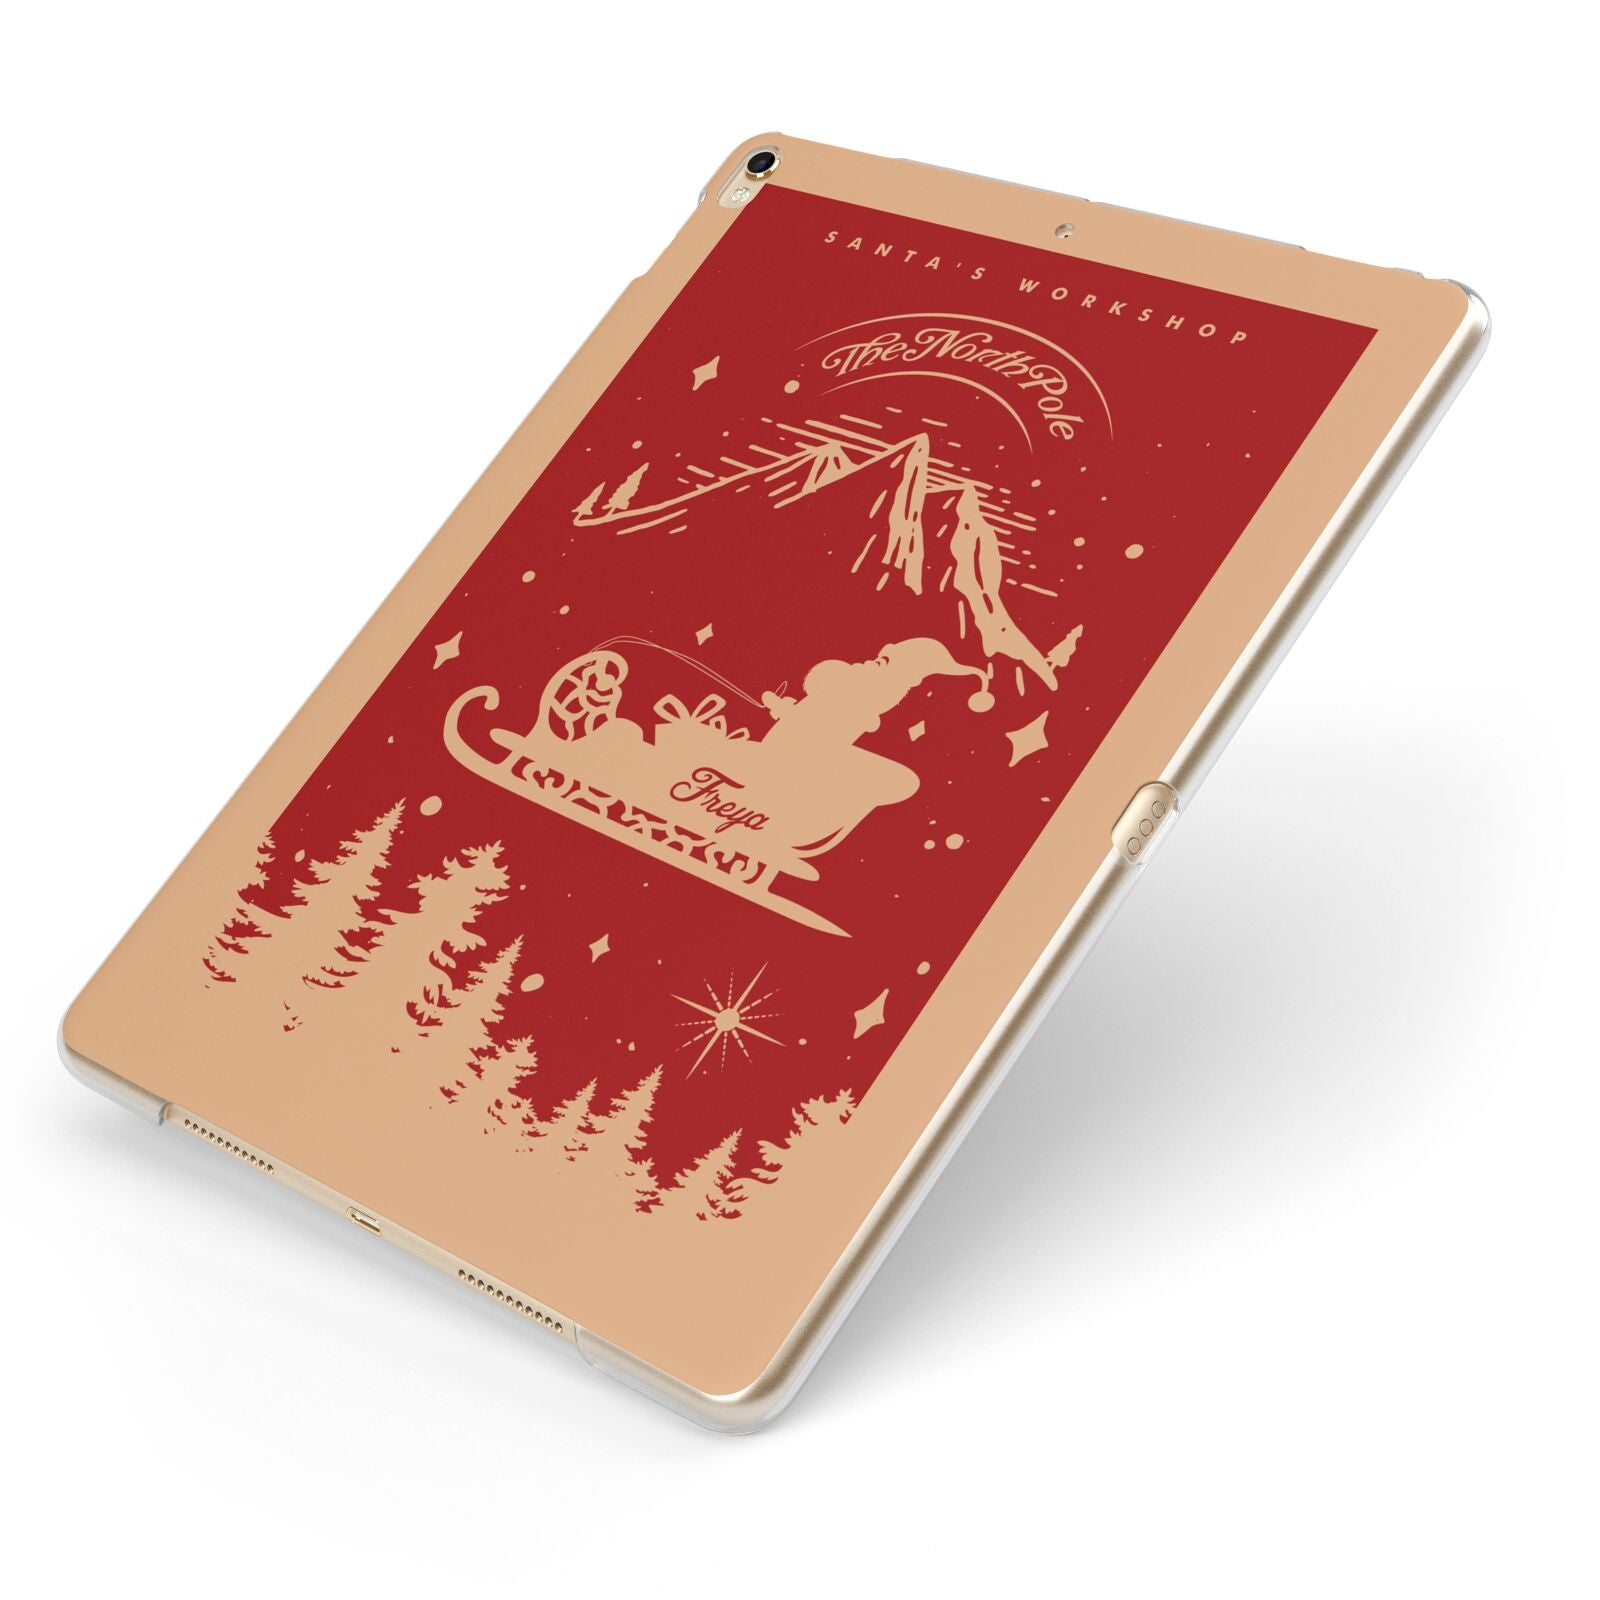 Santas Workshop Personalised Apple iPad Case on Gold iPad Side View